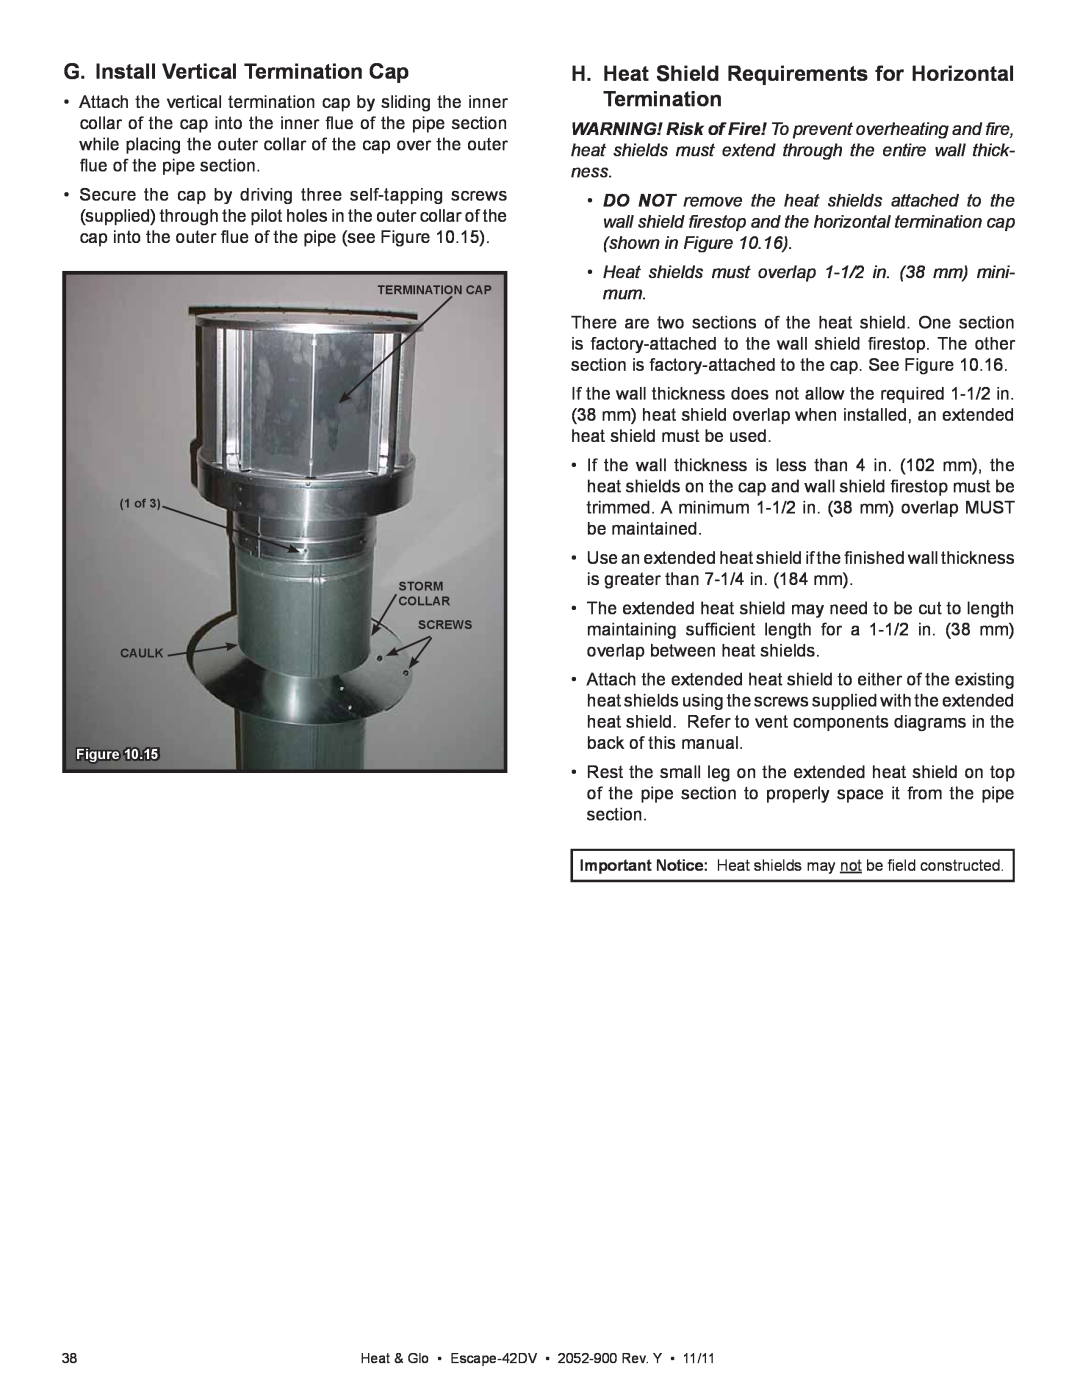 Heat & Glo LifeStyle owner manual G. Install Vertical Termination Cap, Heat & Glo • Escape-42DV• 2052-900Rev. Y • 11/11 